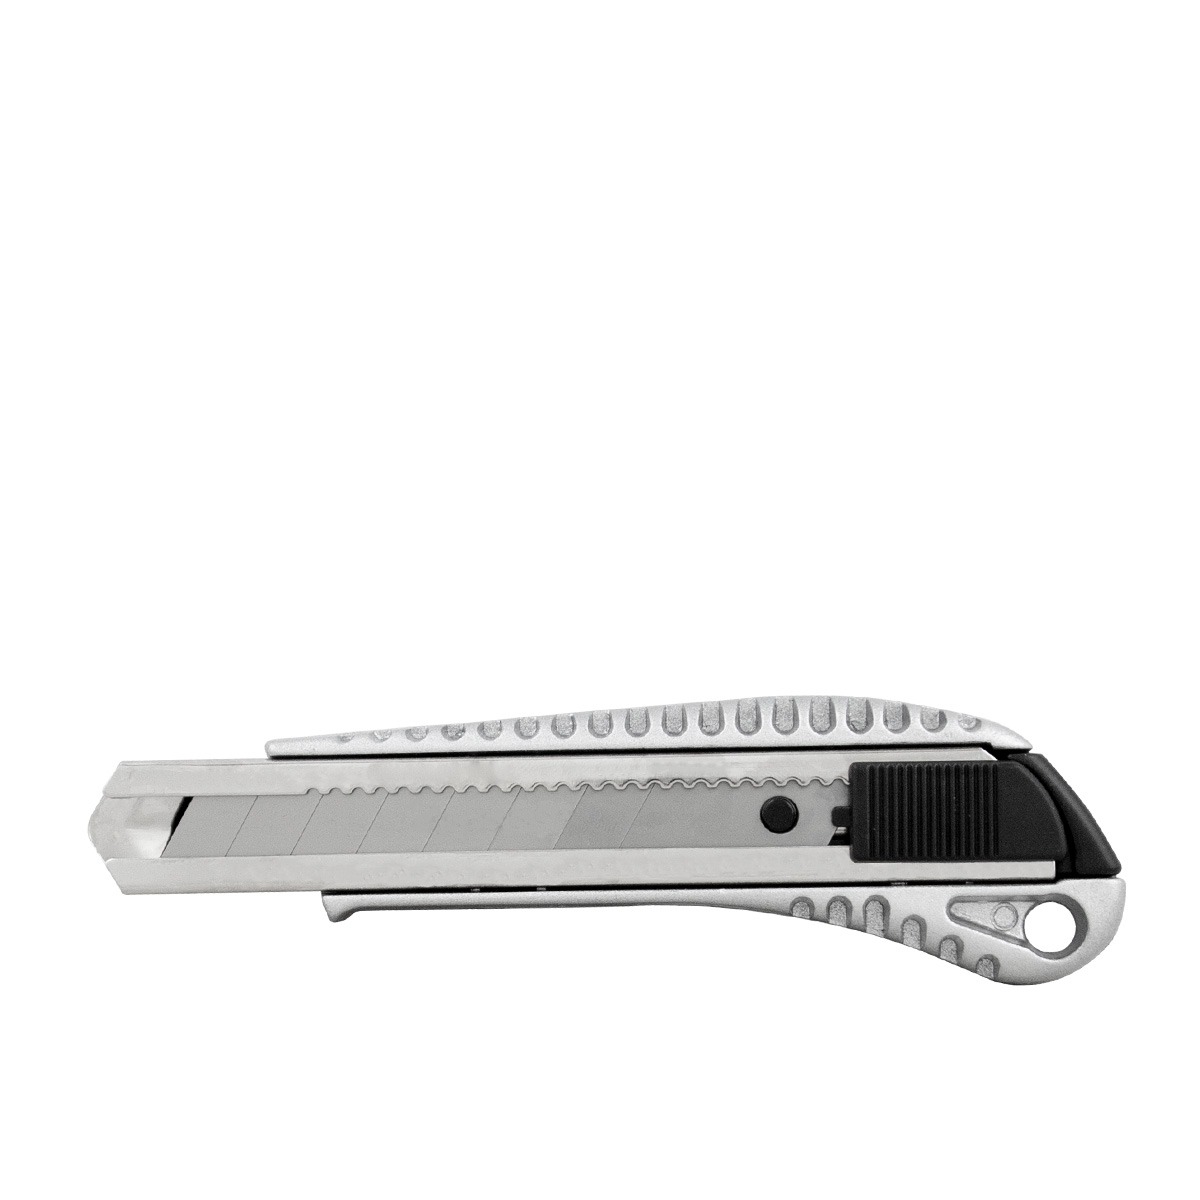 Farbklecks24 Premium Cuttermesser, Alu, 18mm, mit Metallführung